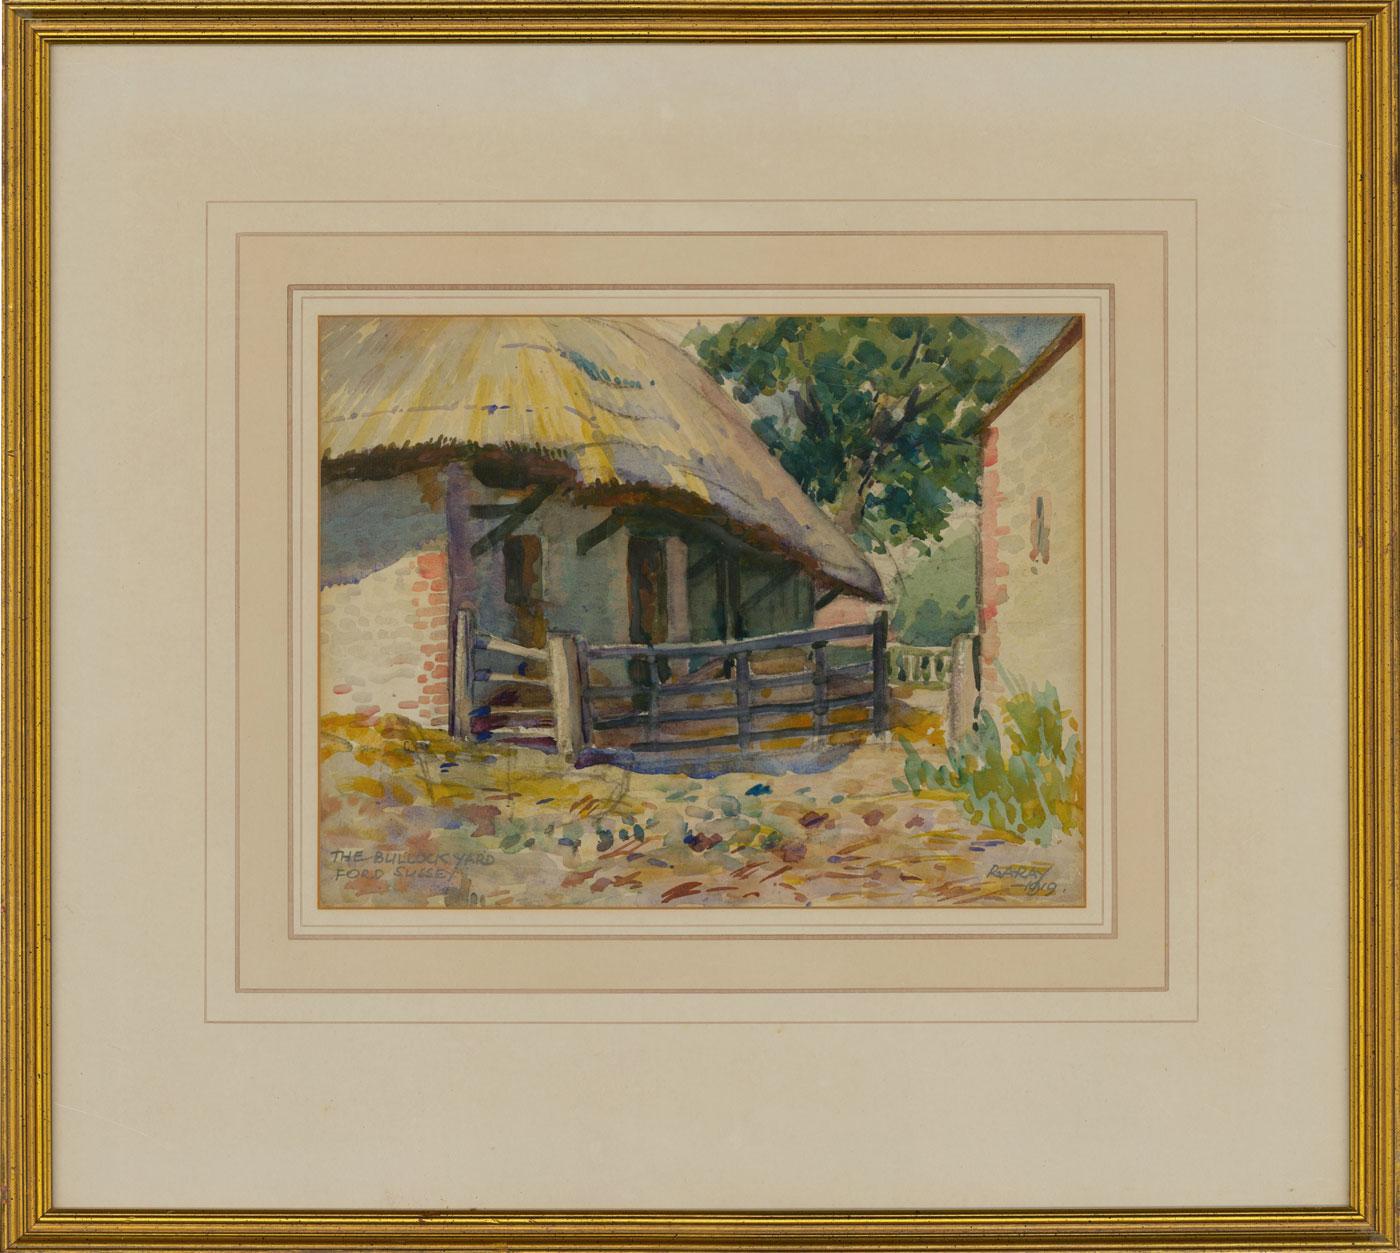 Unknown Landscape Art - Richard Archibald Ray (1884-1968) - 1919 Watercolour, The Bullock Yard